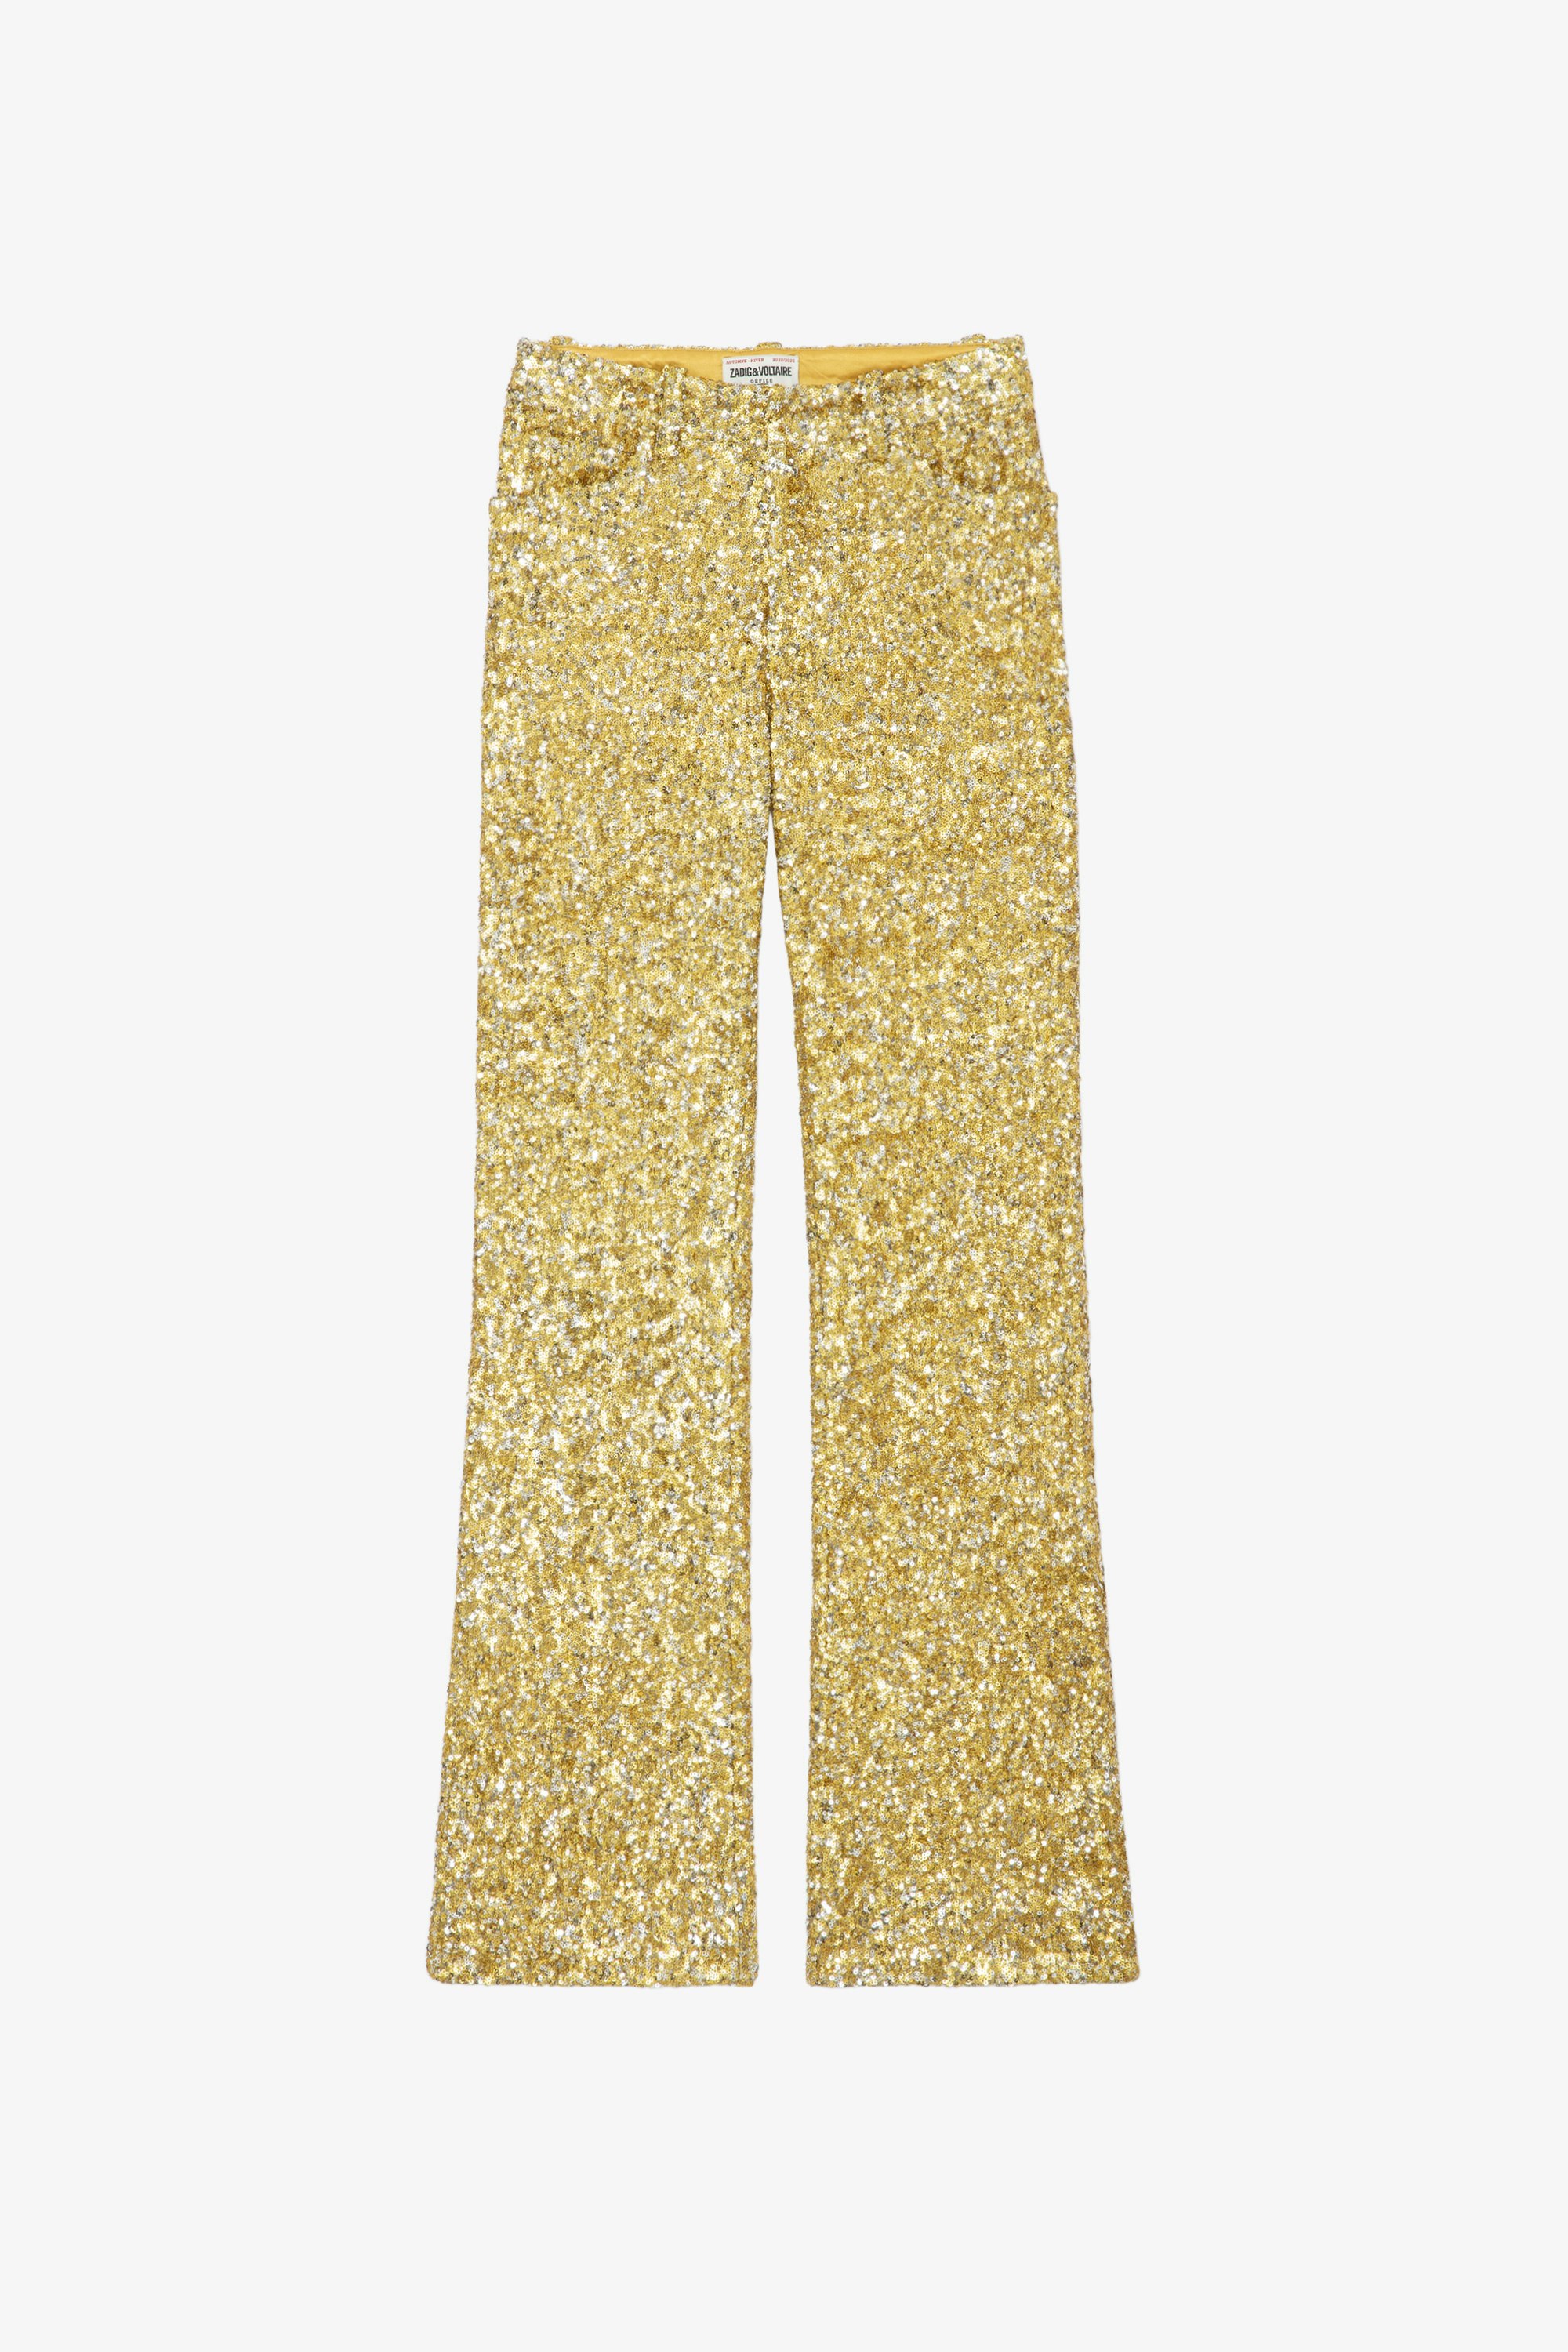 Pantalón Pistol  Pantalones de traje con lentejuelas doradas para mujer 